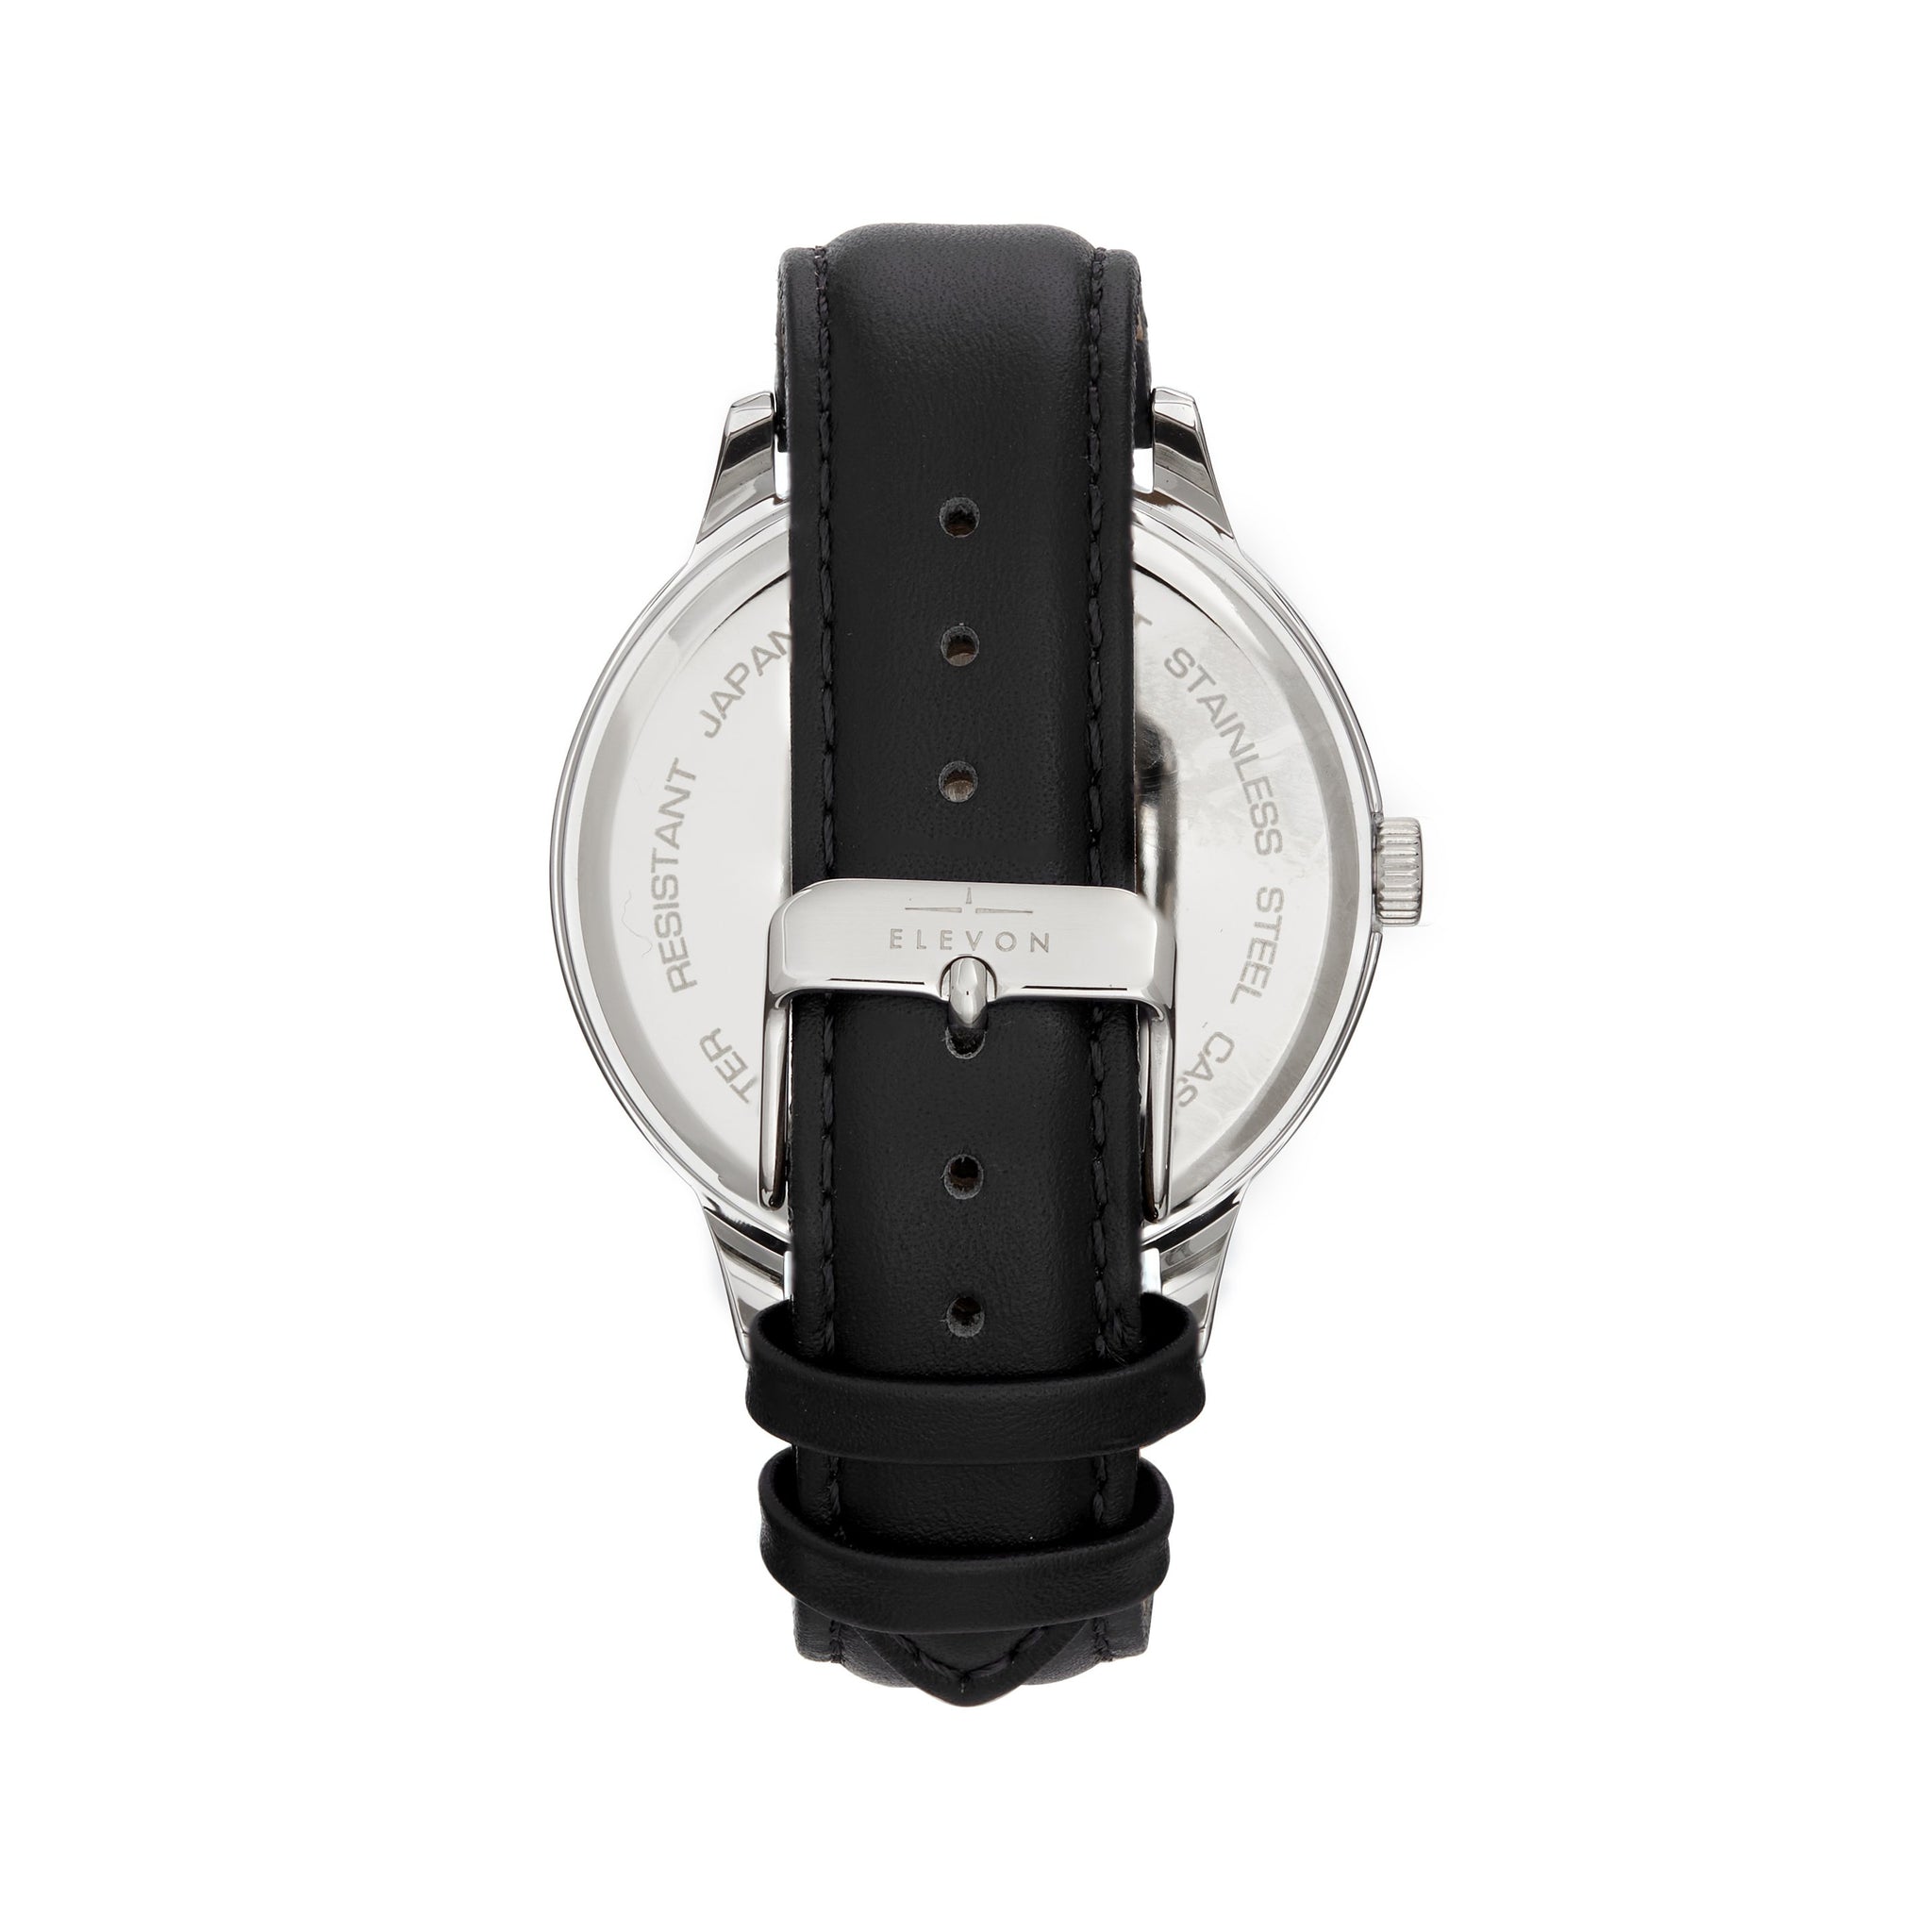 Elevon Sabre Leather-Band Watch w/Date - Silver/Black/Black - ELE121-2